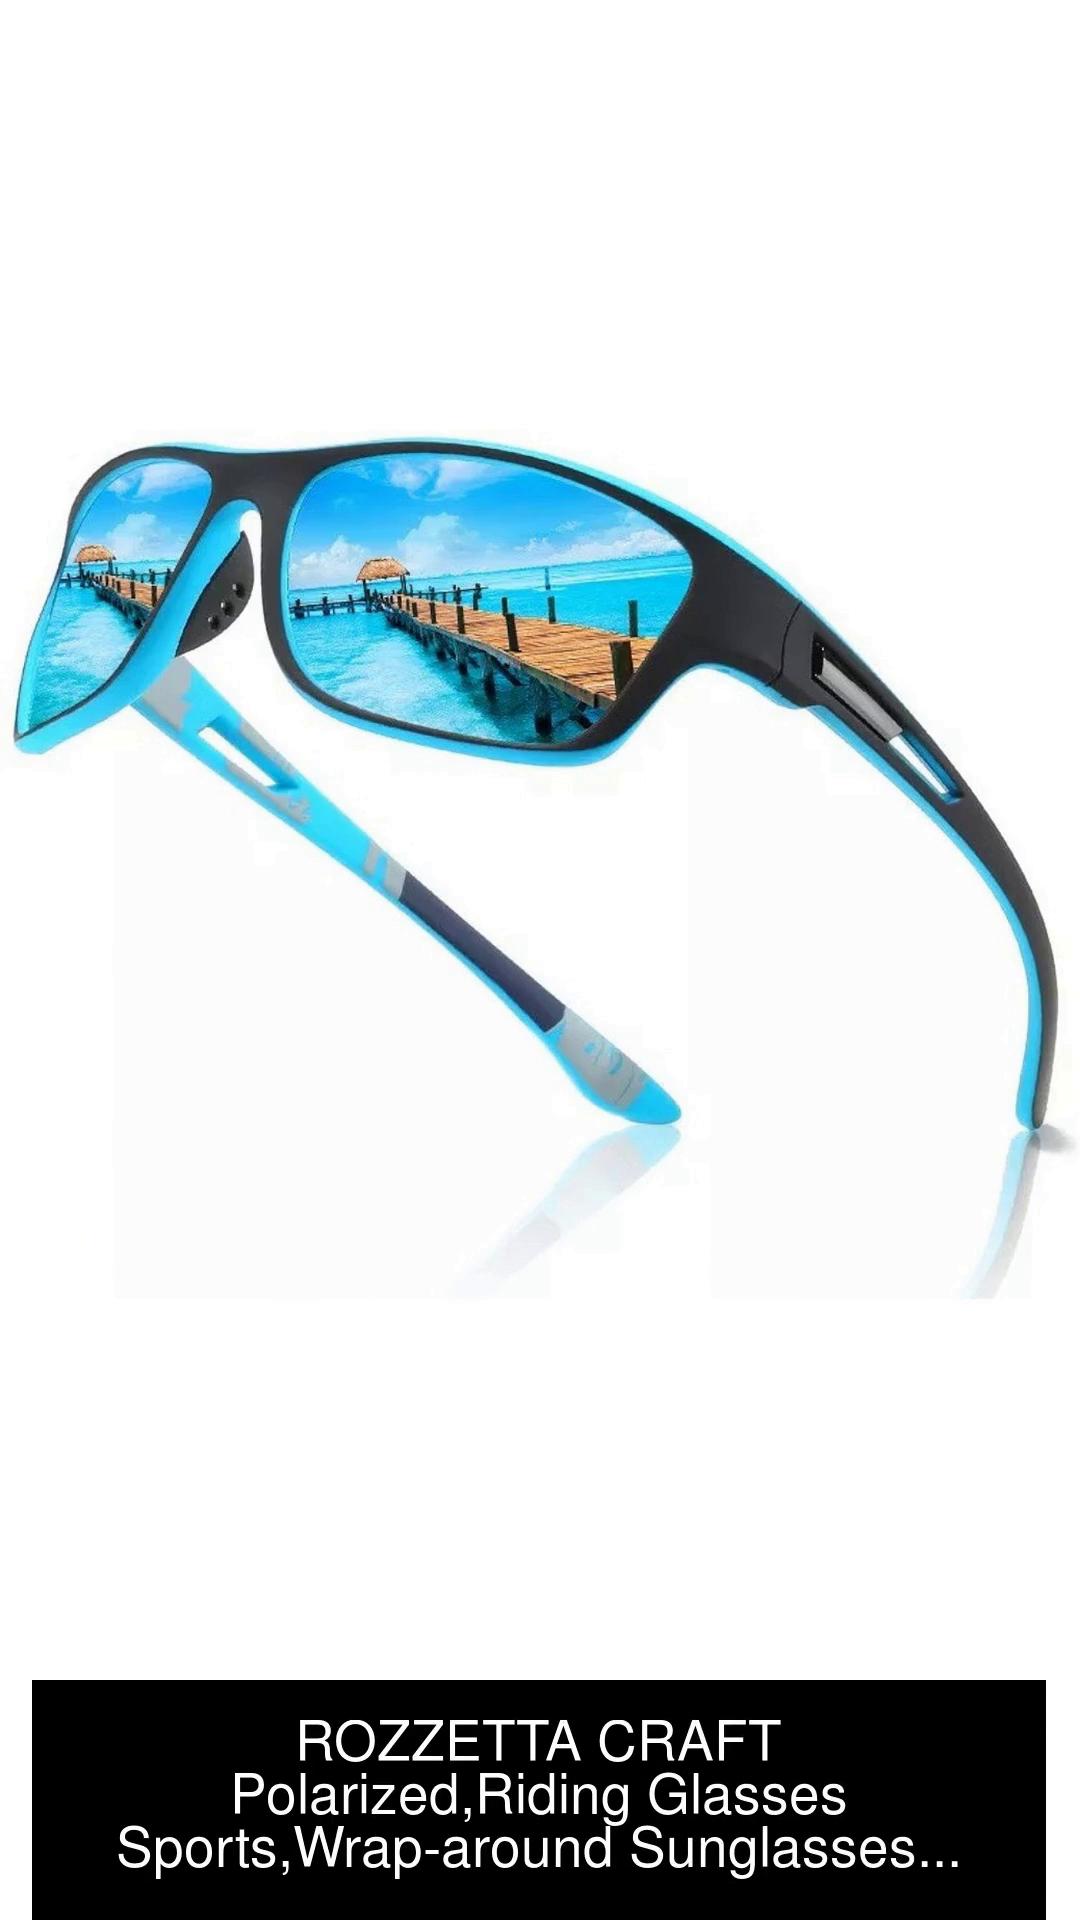 ROZZETTA CRAFT Sports, Wrap-around Sunglasses